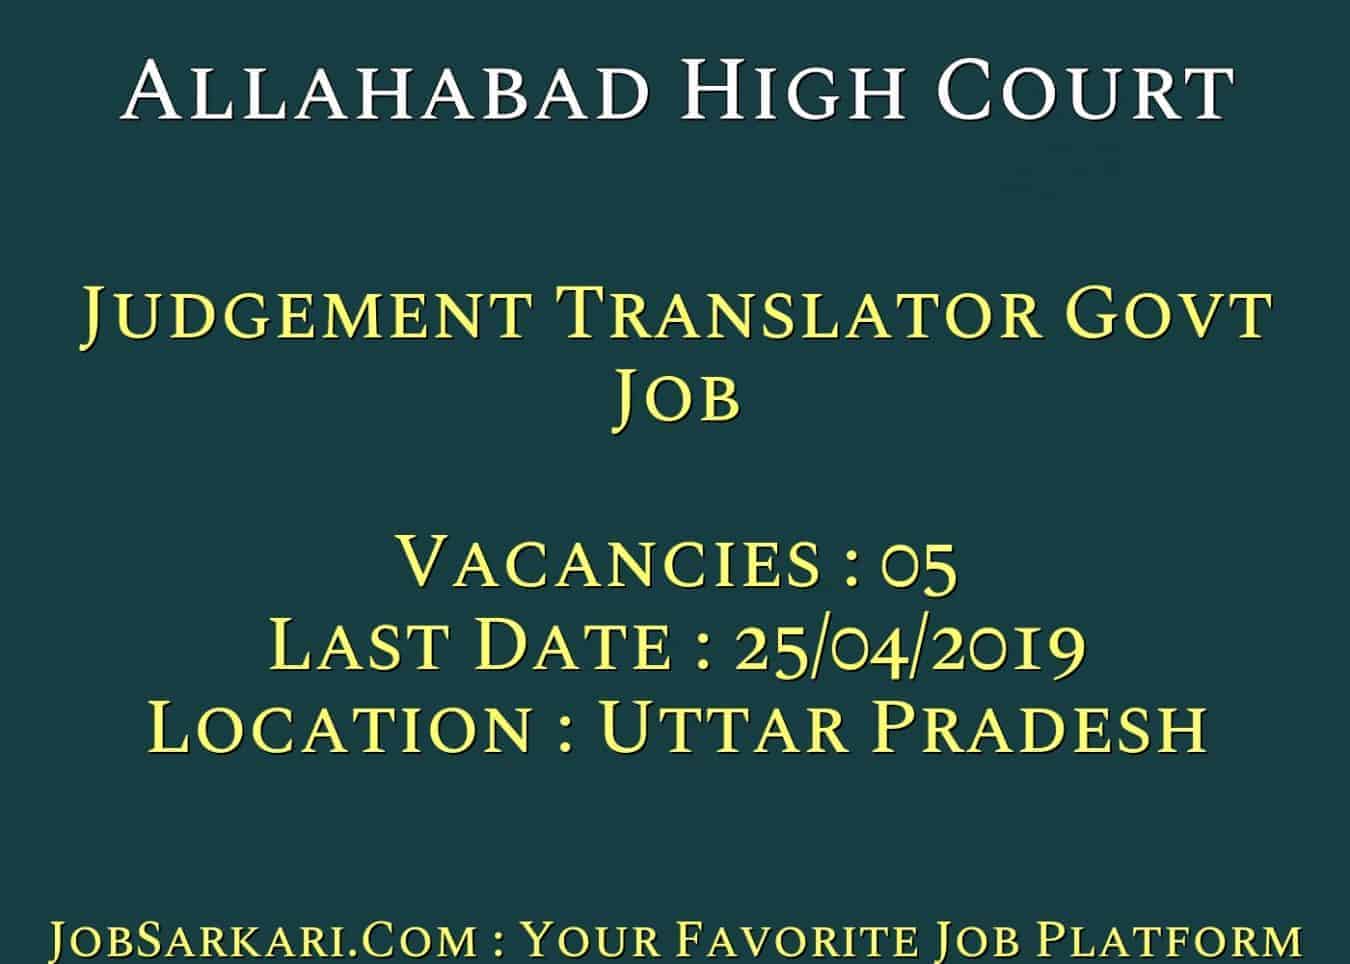 Allahabad High Court Recruitment 2019 For Judgement Translator Govt Job